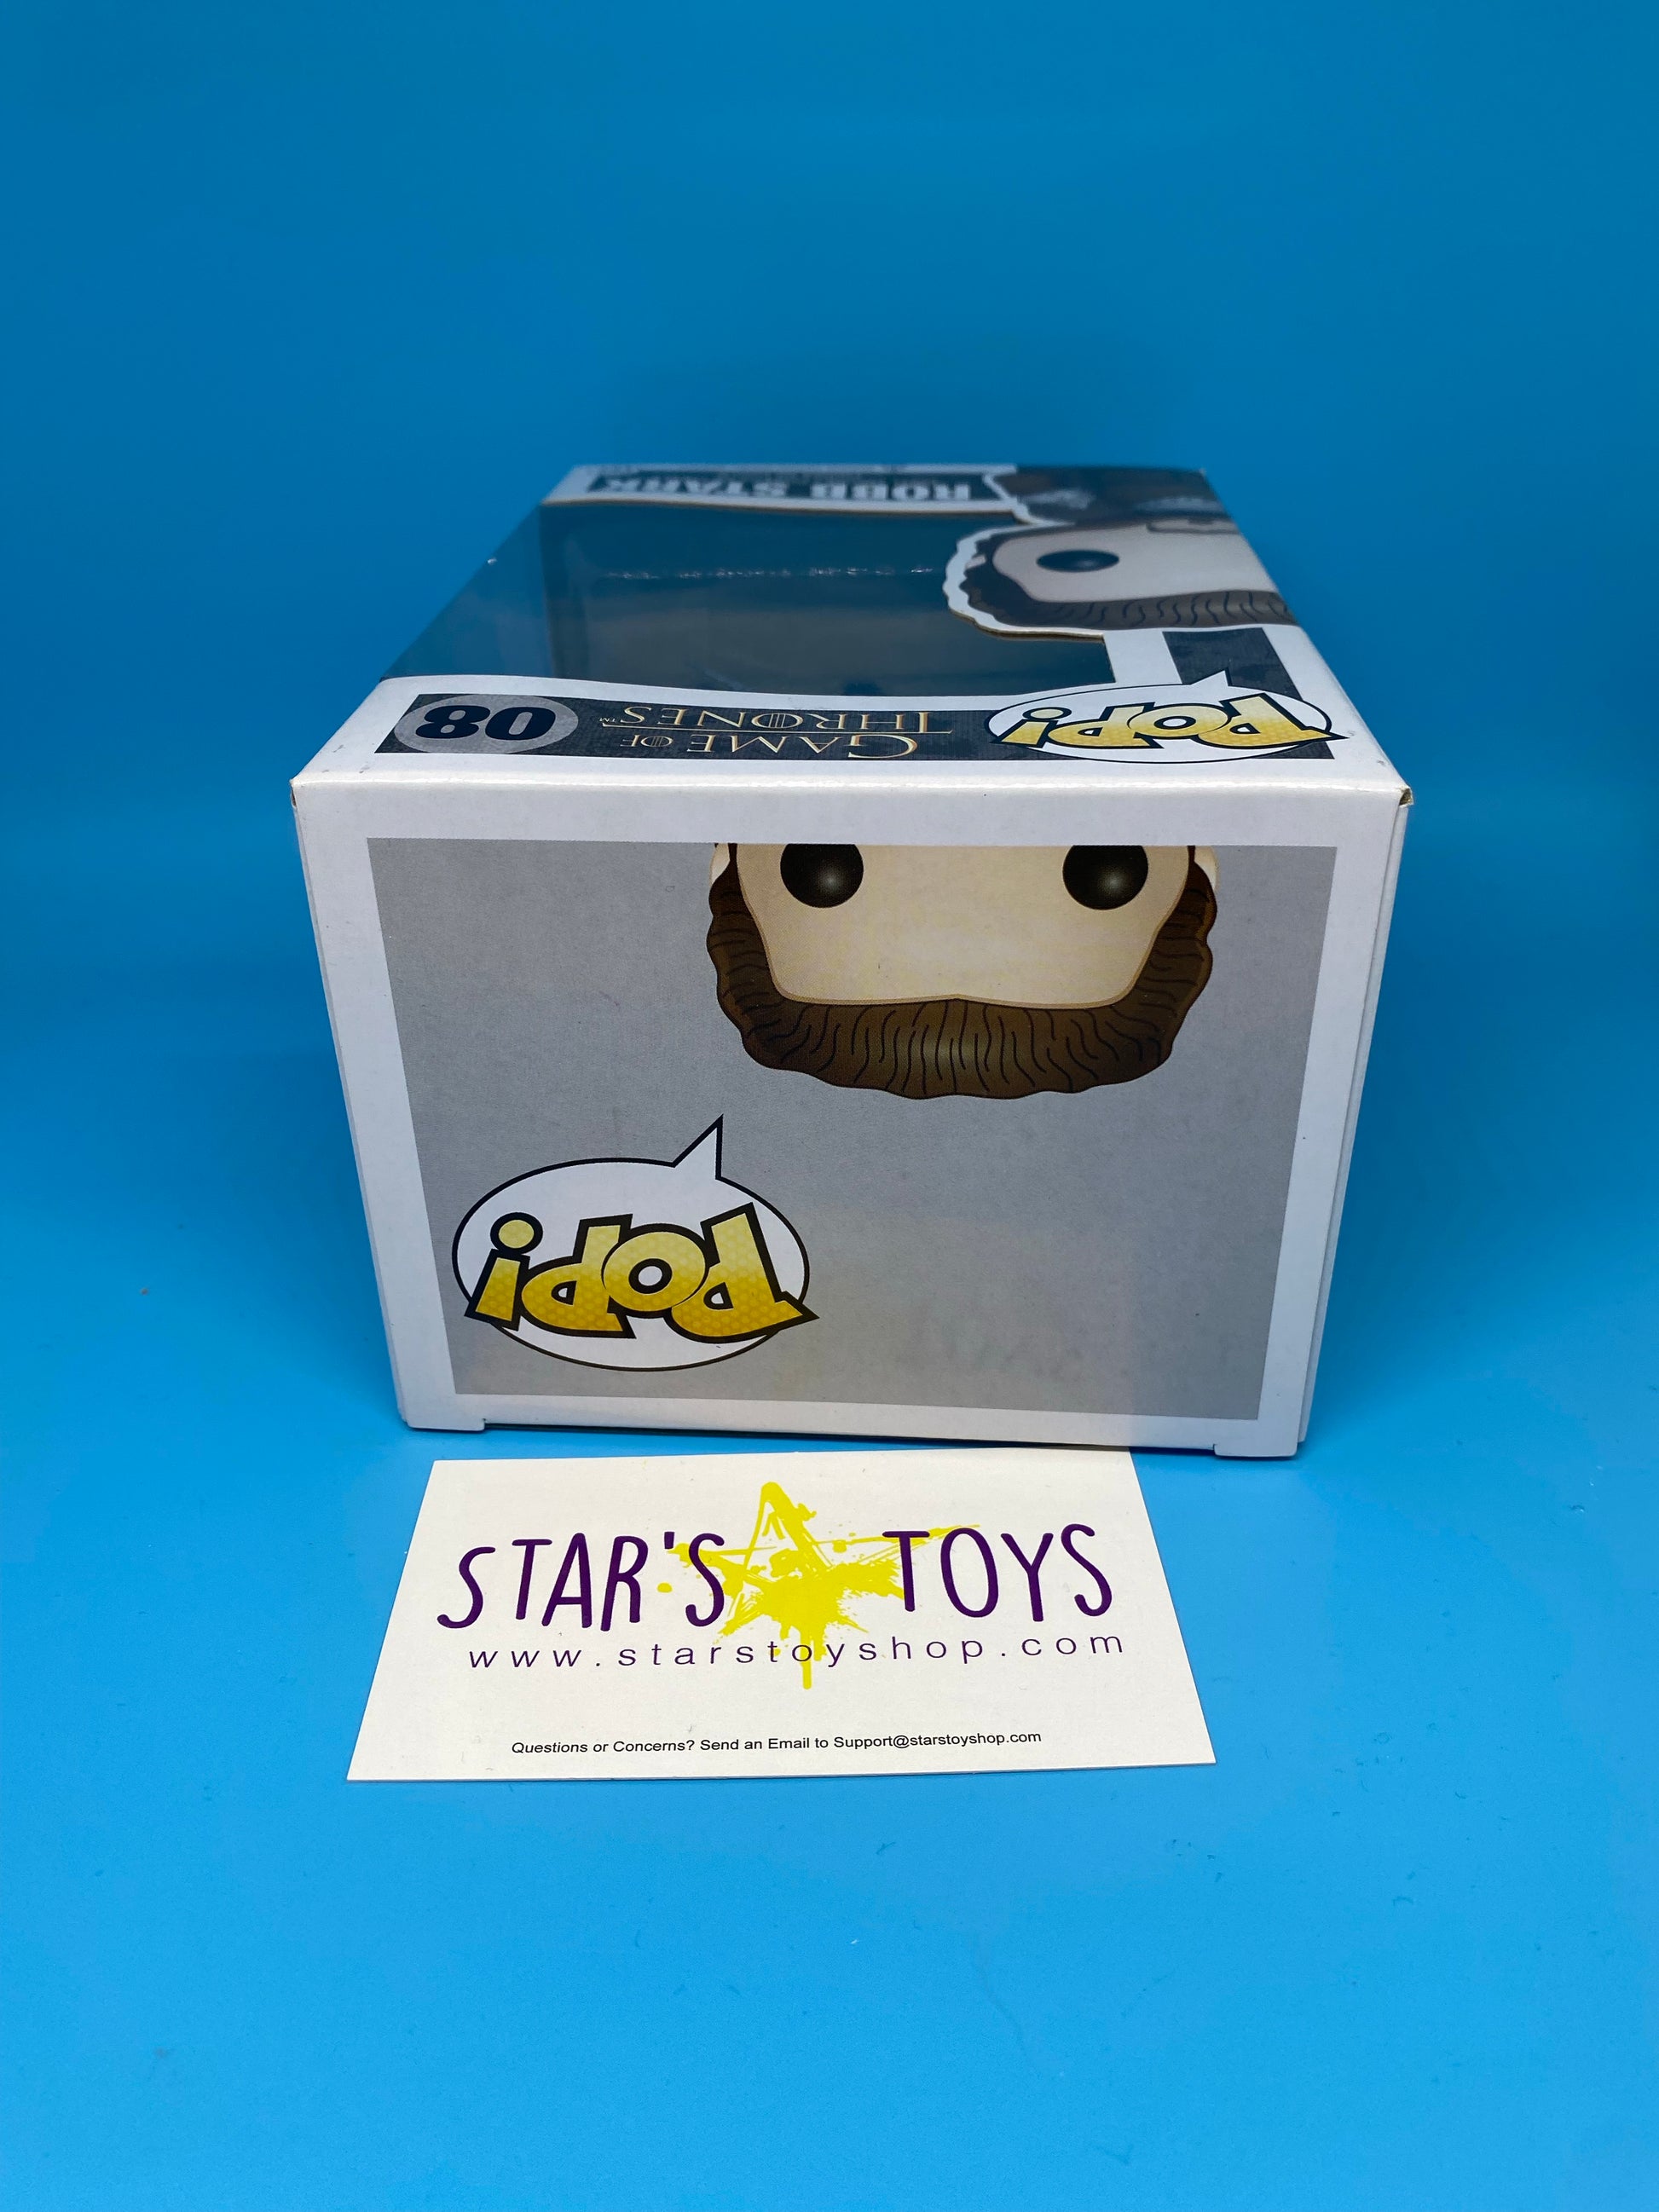 Pop! Game of Thrones -Robb Stark - Star's Toy Shop